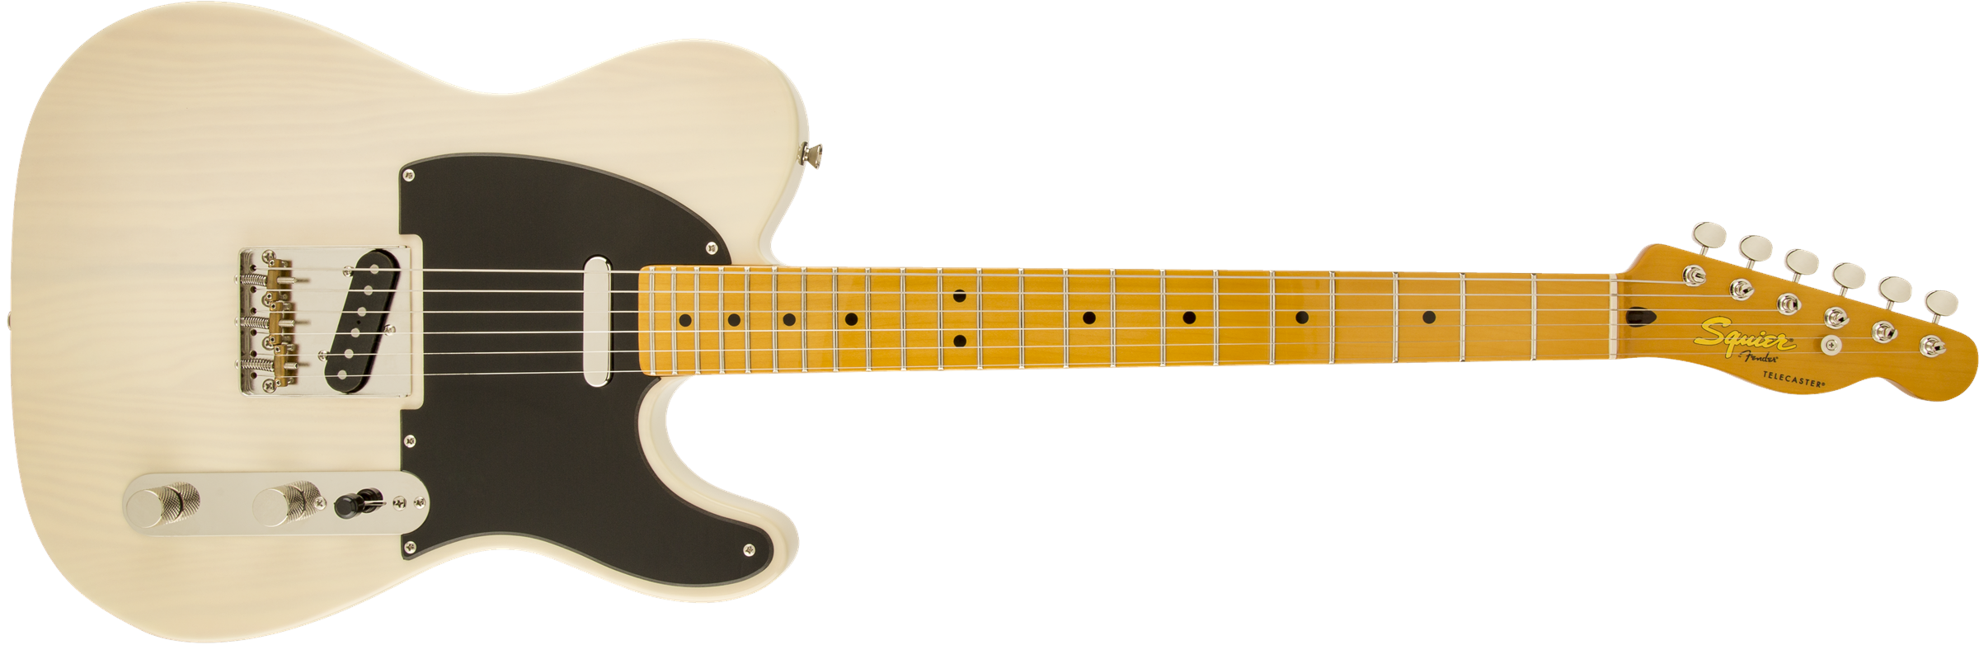 Squier By Fender - Classic Vibe 50's Telecaster - Elektrisk Guitar (Vintage Blond)